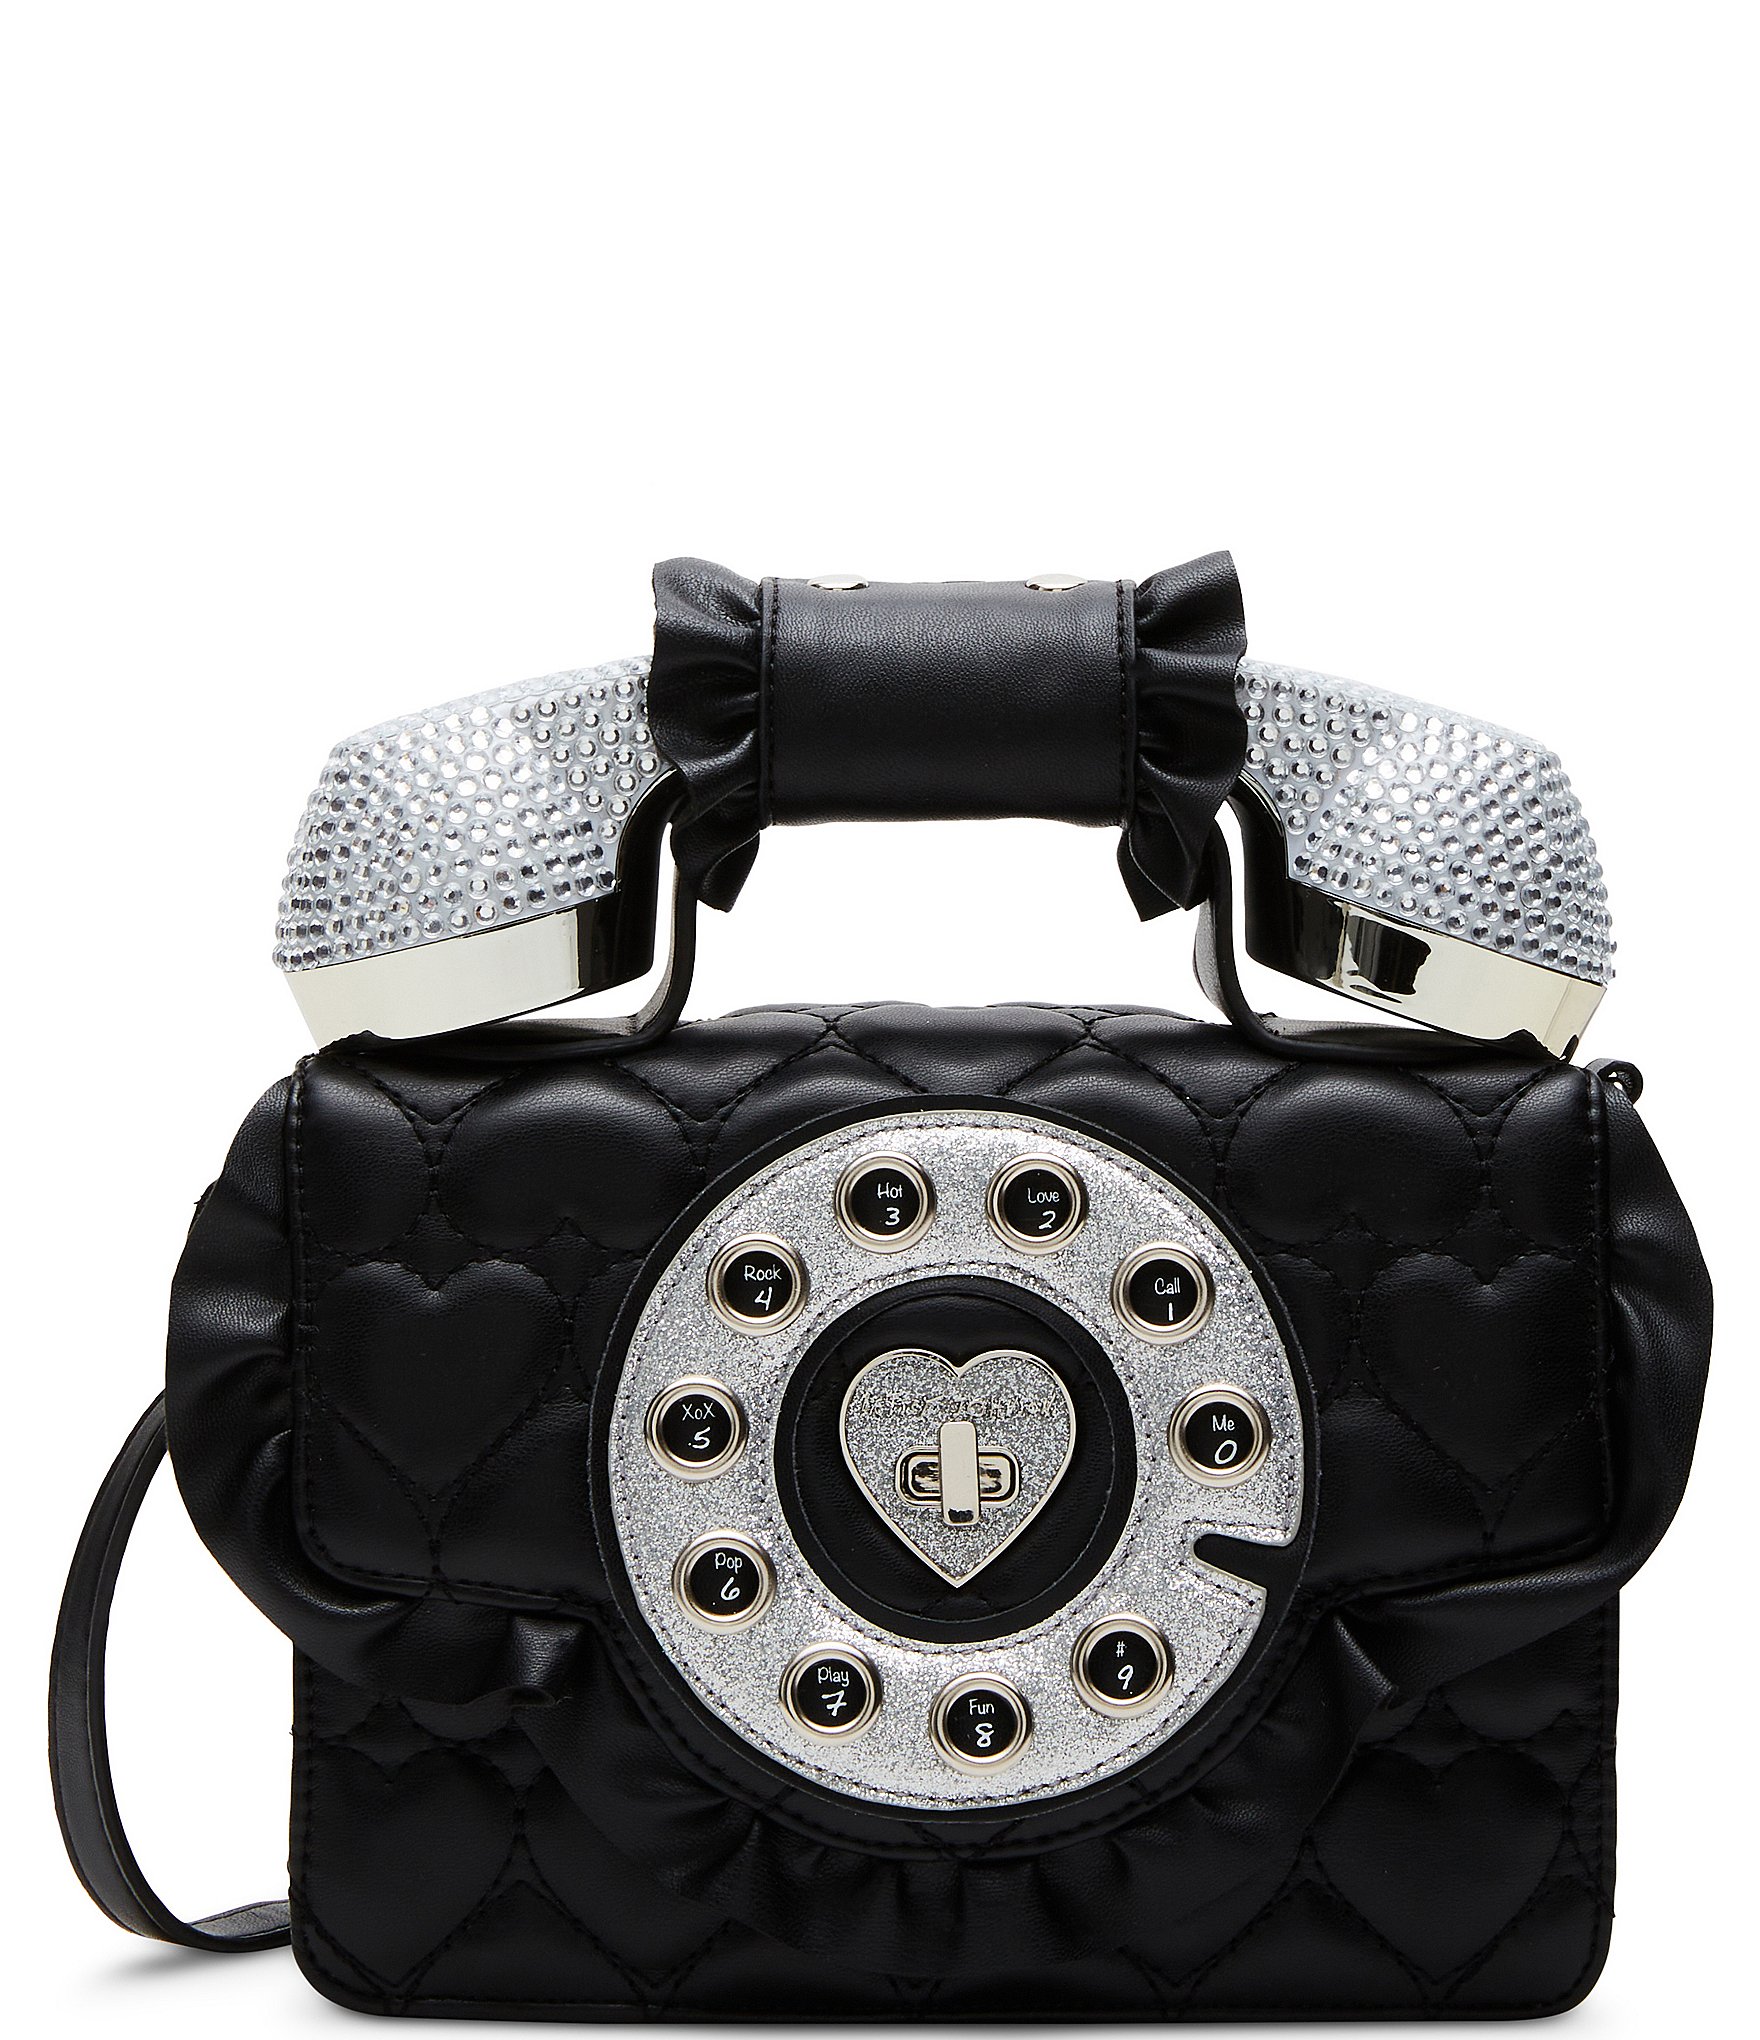 NEW! Betsey Johnson Phone Bag purse w/Wireless handset WORKS  Black/White/Blue | eBay